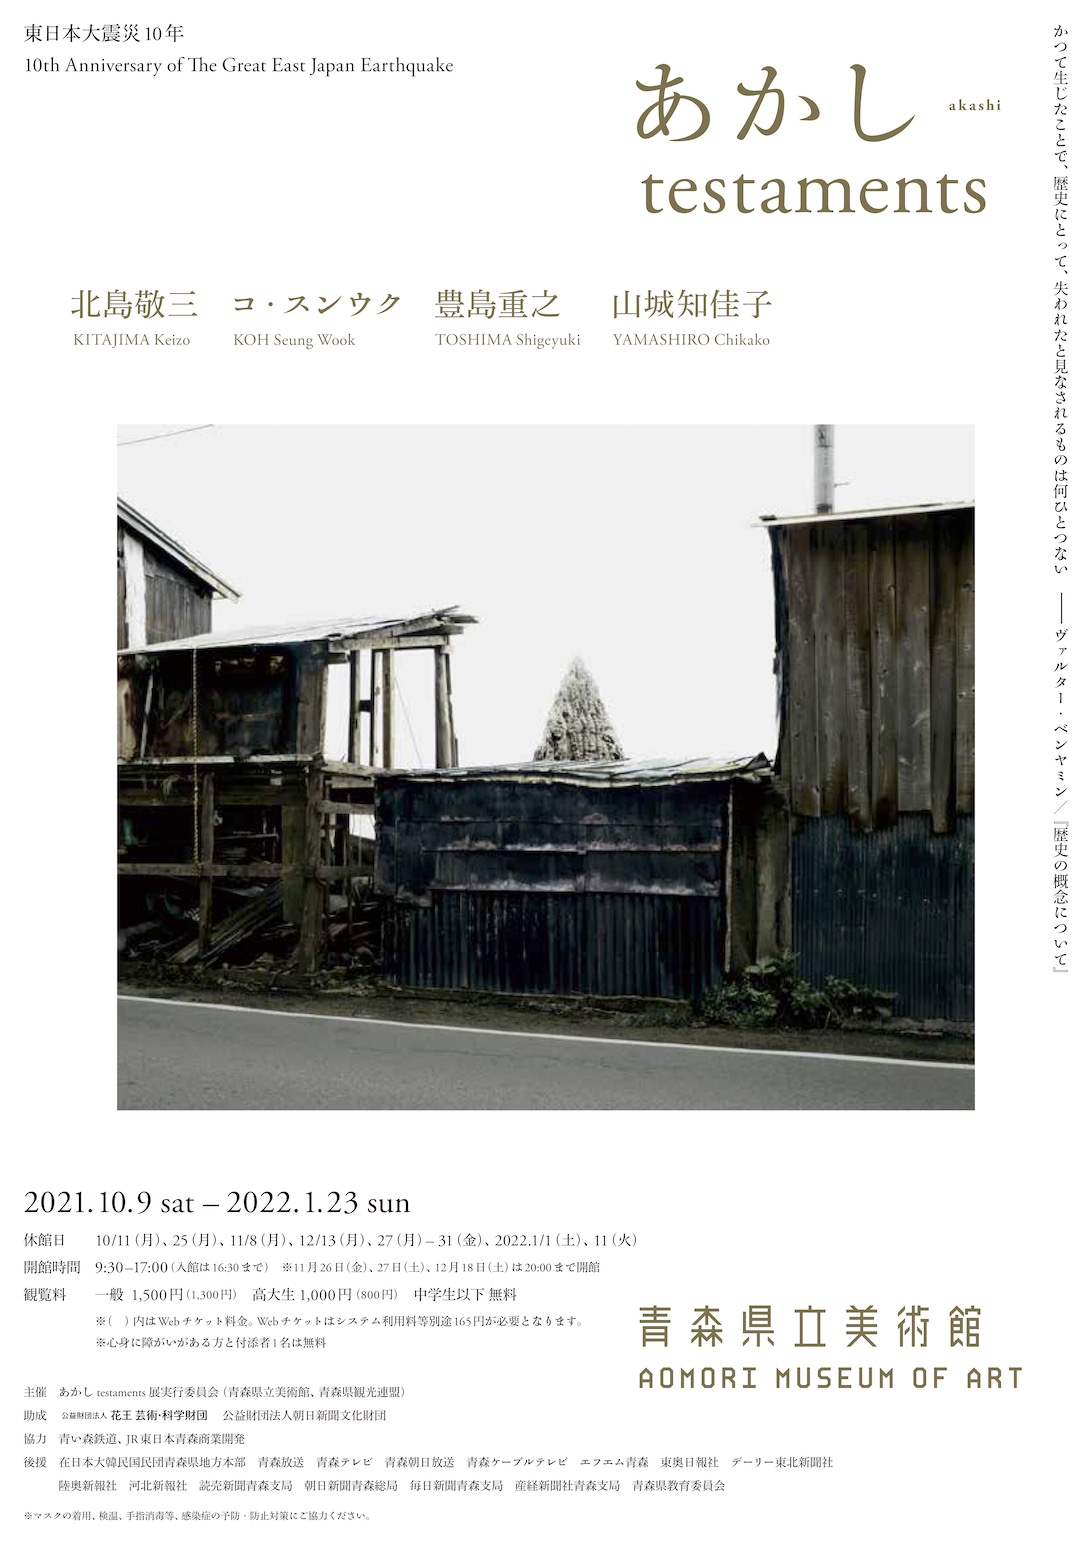 AKASHI testaments – 10th Anniversary of the Great East Japan Earthquake